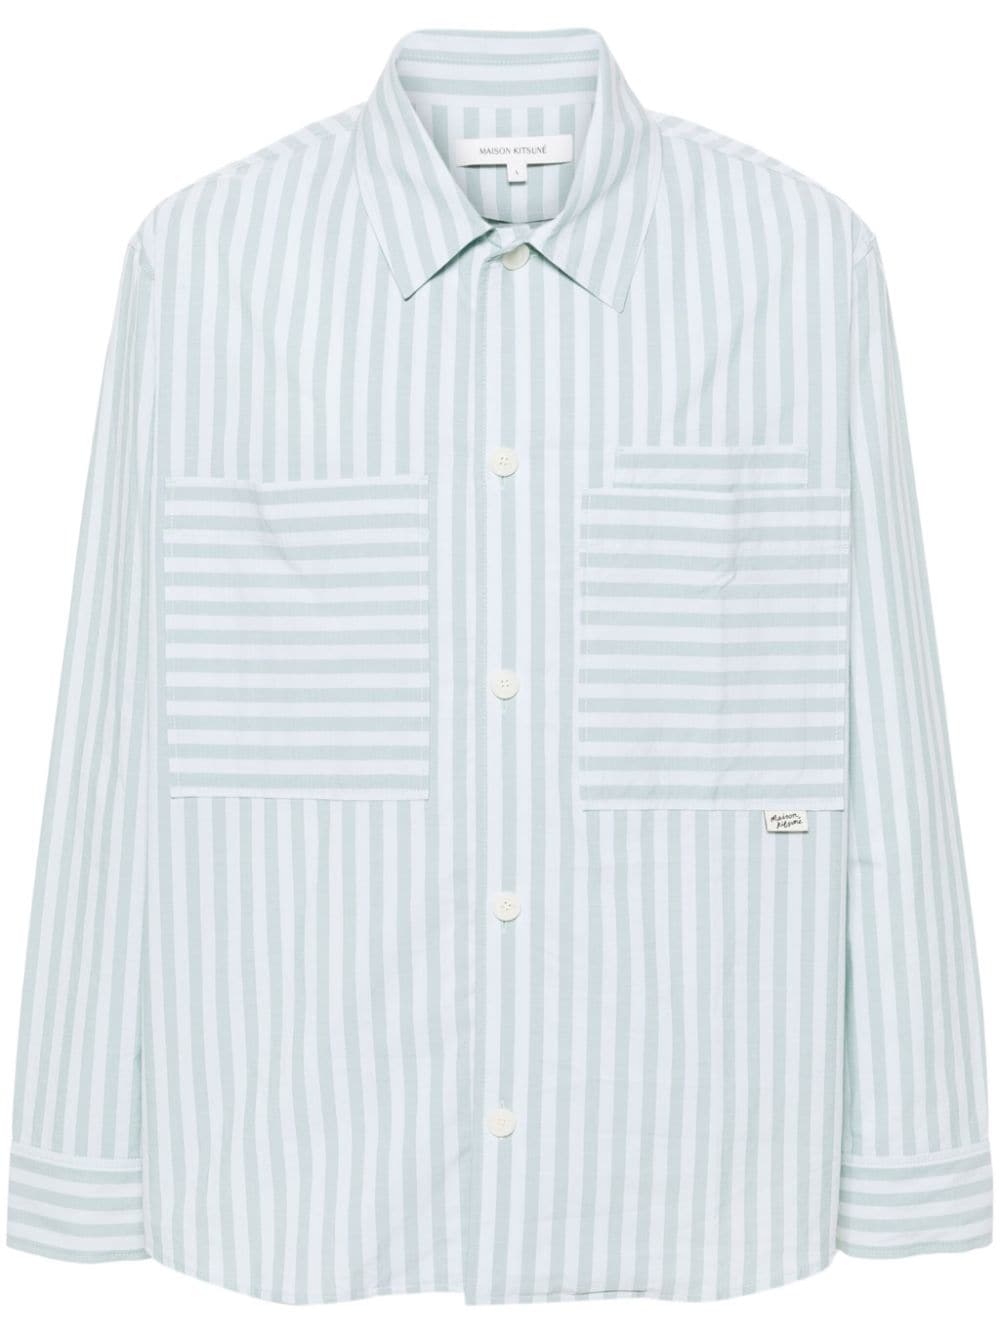 Maison Kitsuné Striped Cotton Shirt In Blue